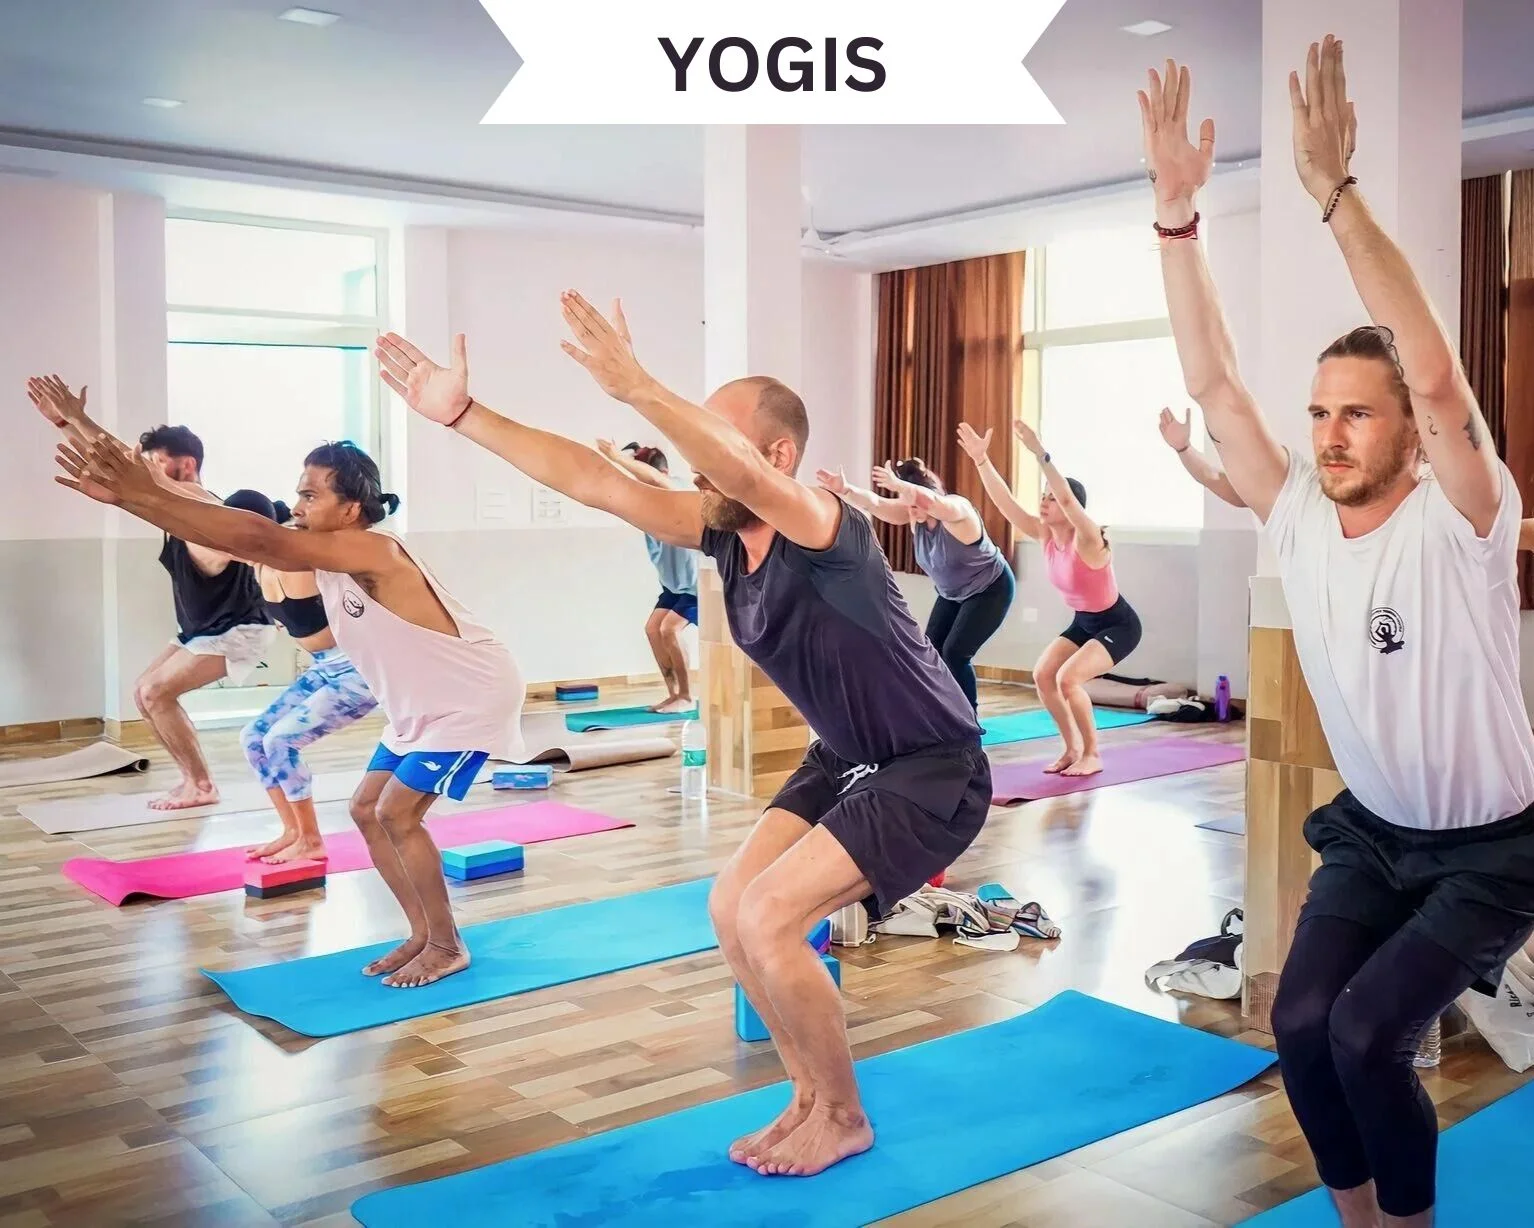 100 hour teacher training course yogis